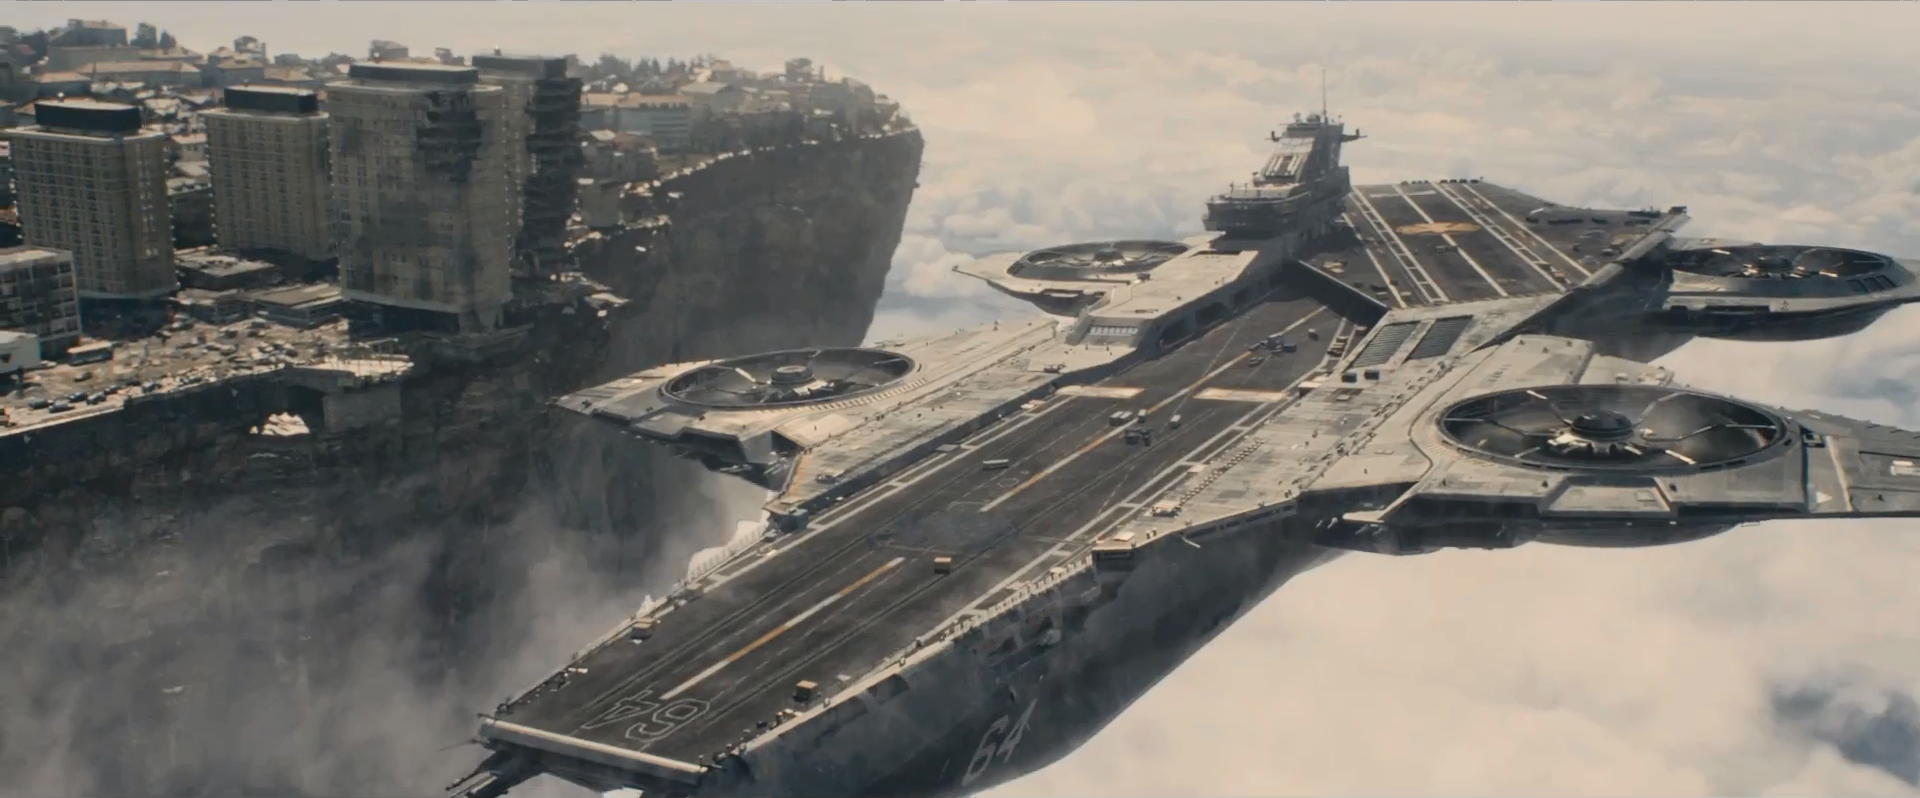 Nick Fury 聯同 Maria Hill 駕駛航母及時出現，派出救生飛船接走居民